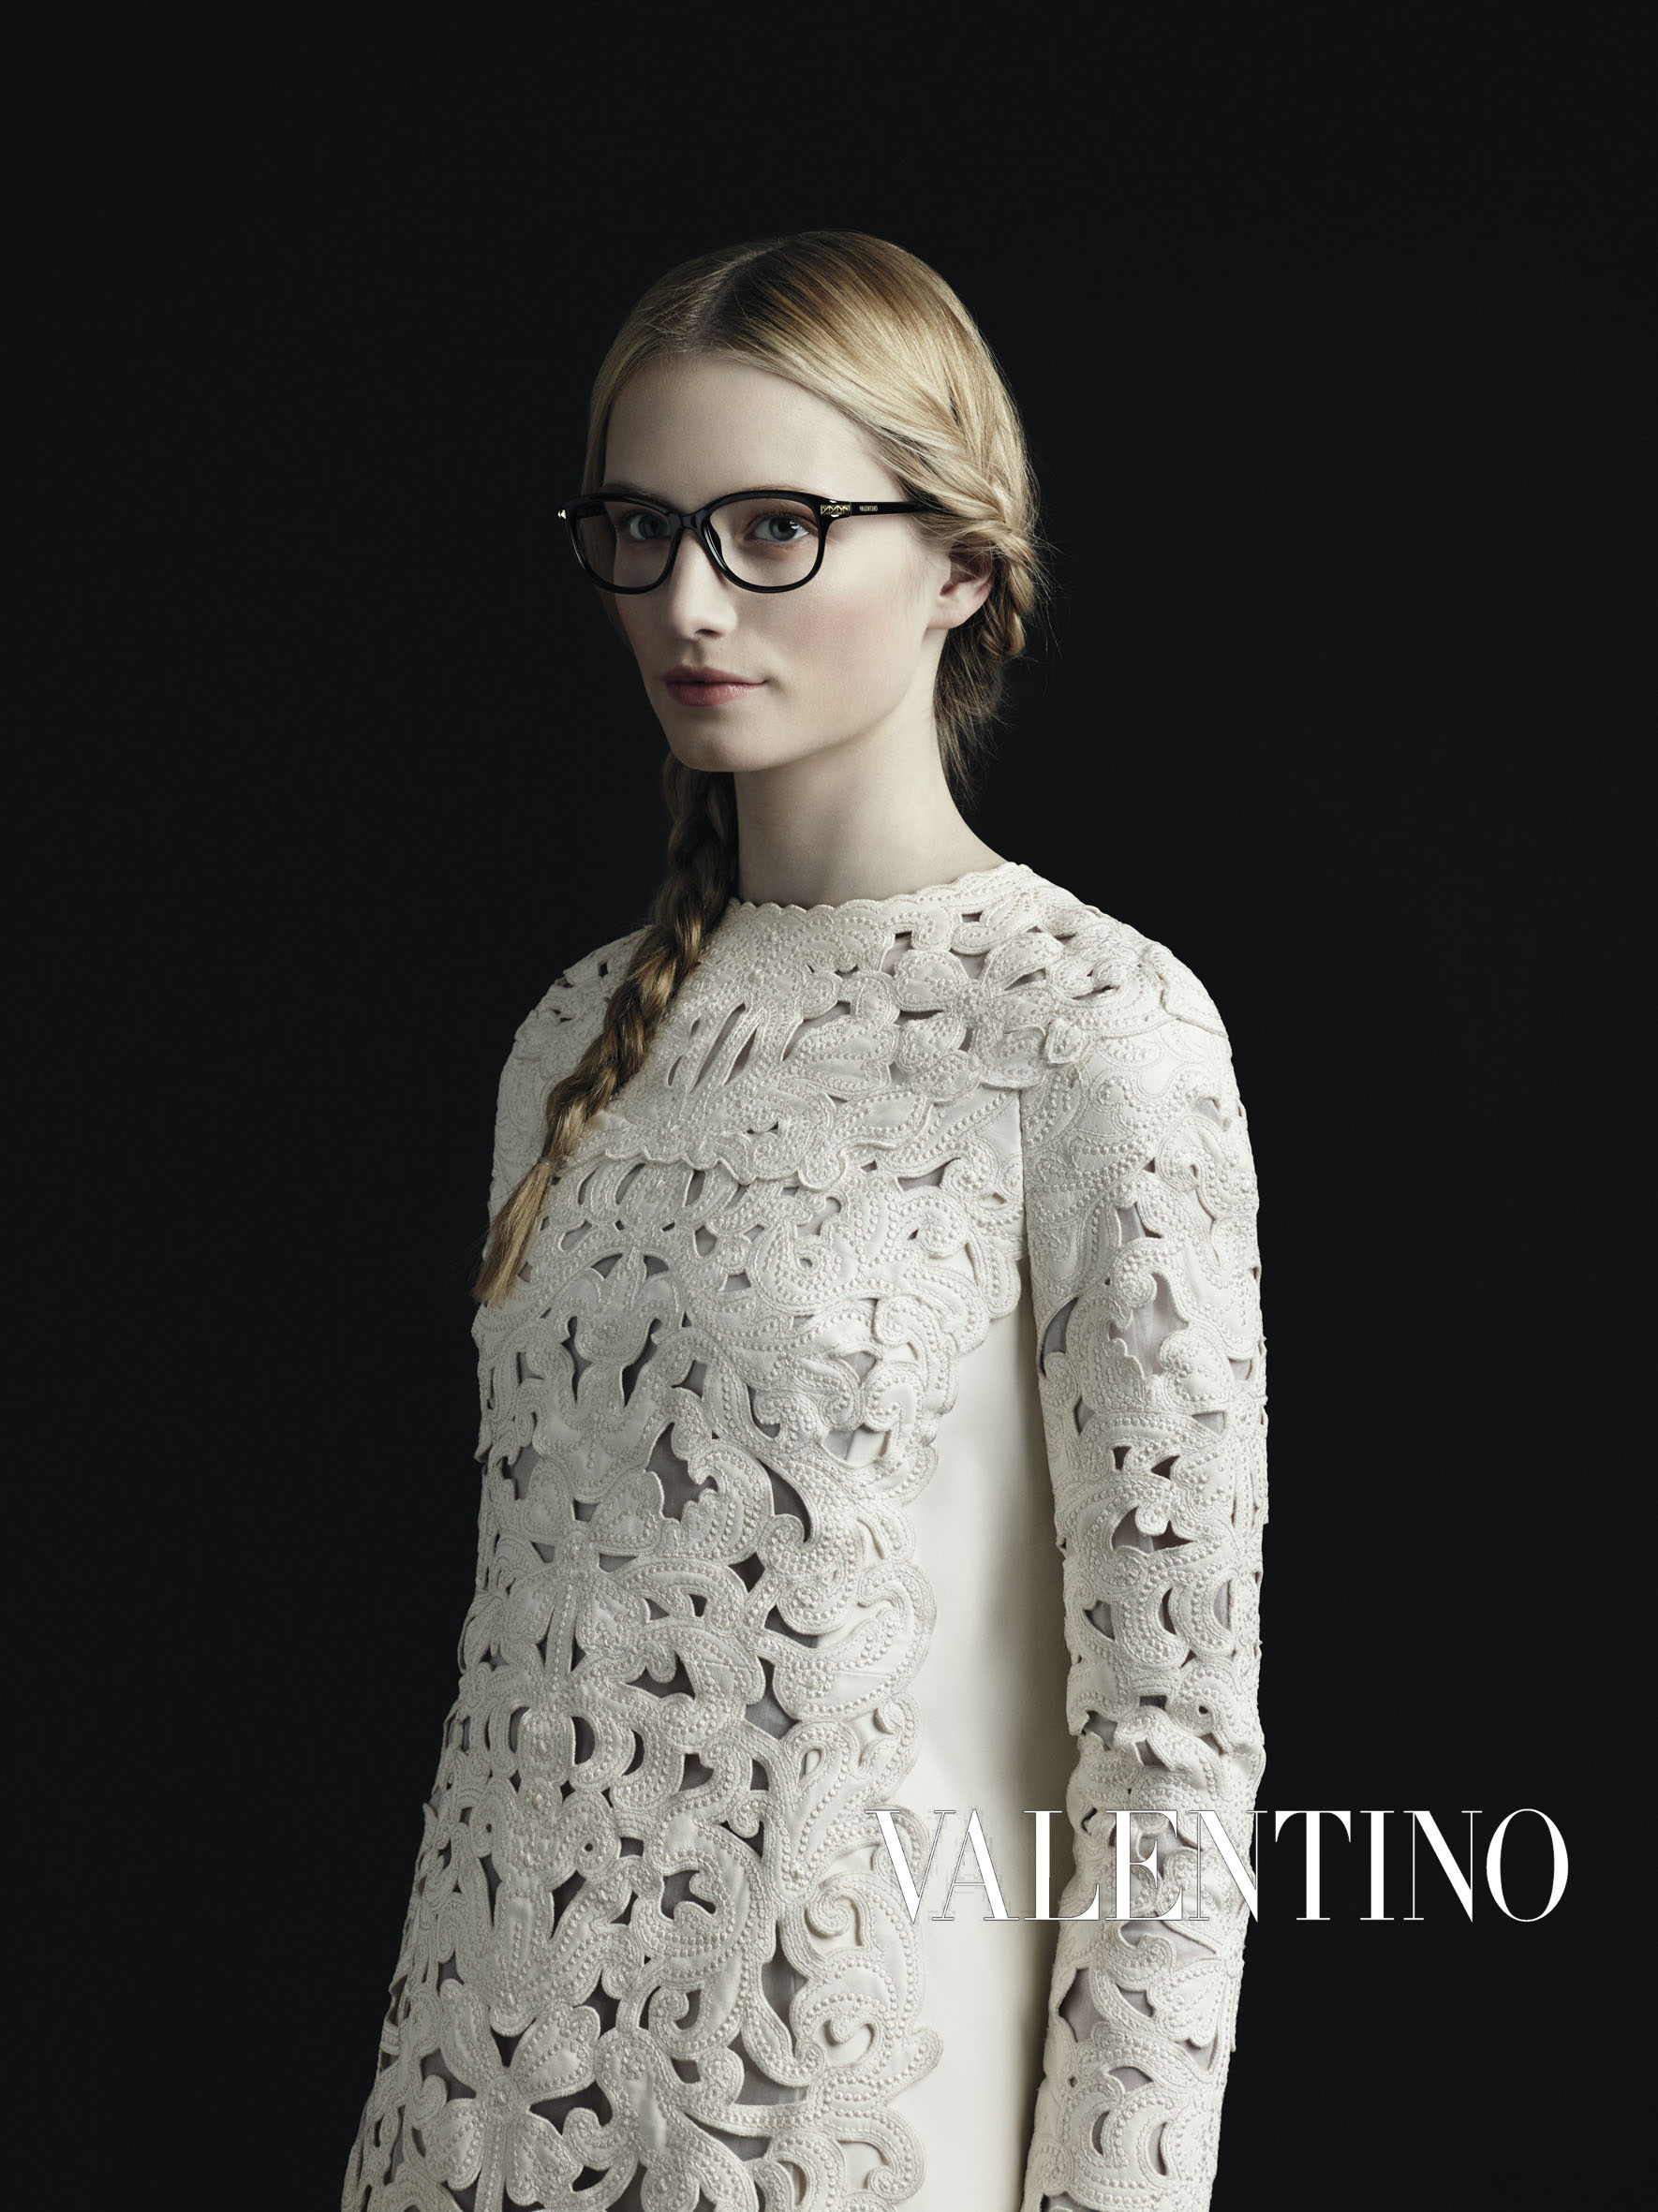 Valentino Eyewear FW 2013 | Pablo Arroyo | Valentino | Numerique Retouch Photo Retouching Studio